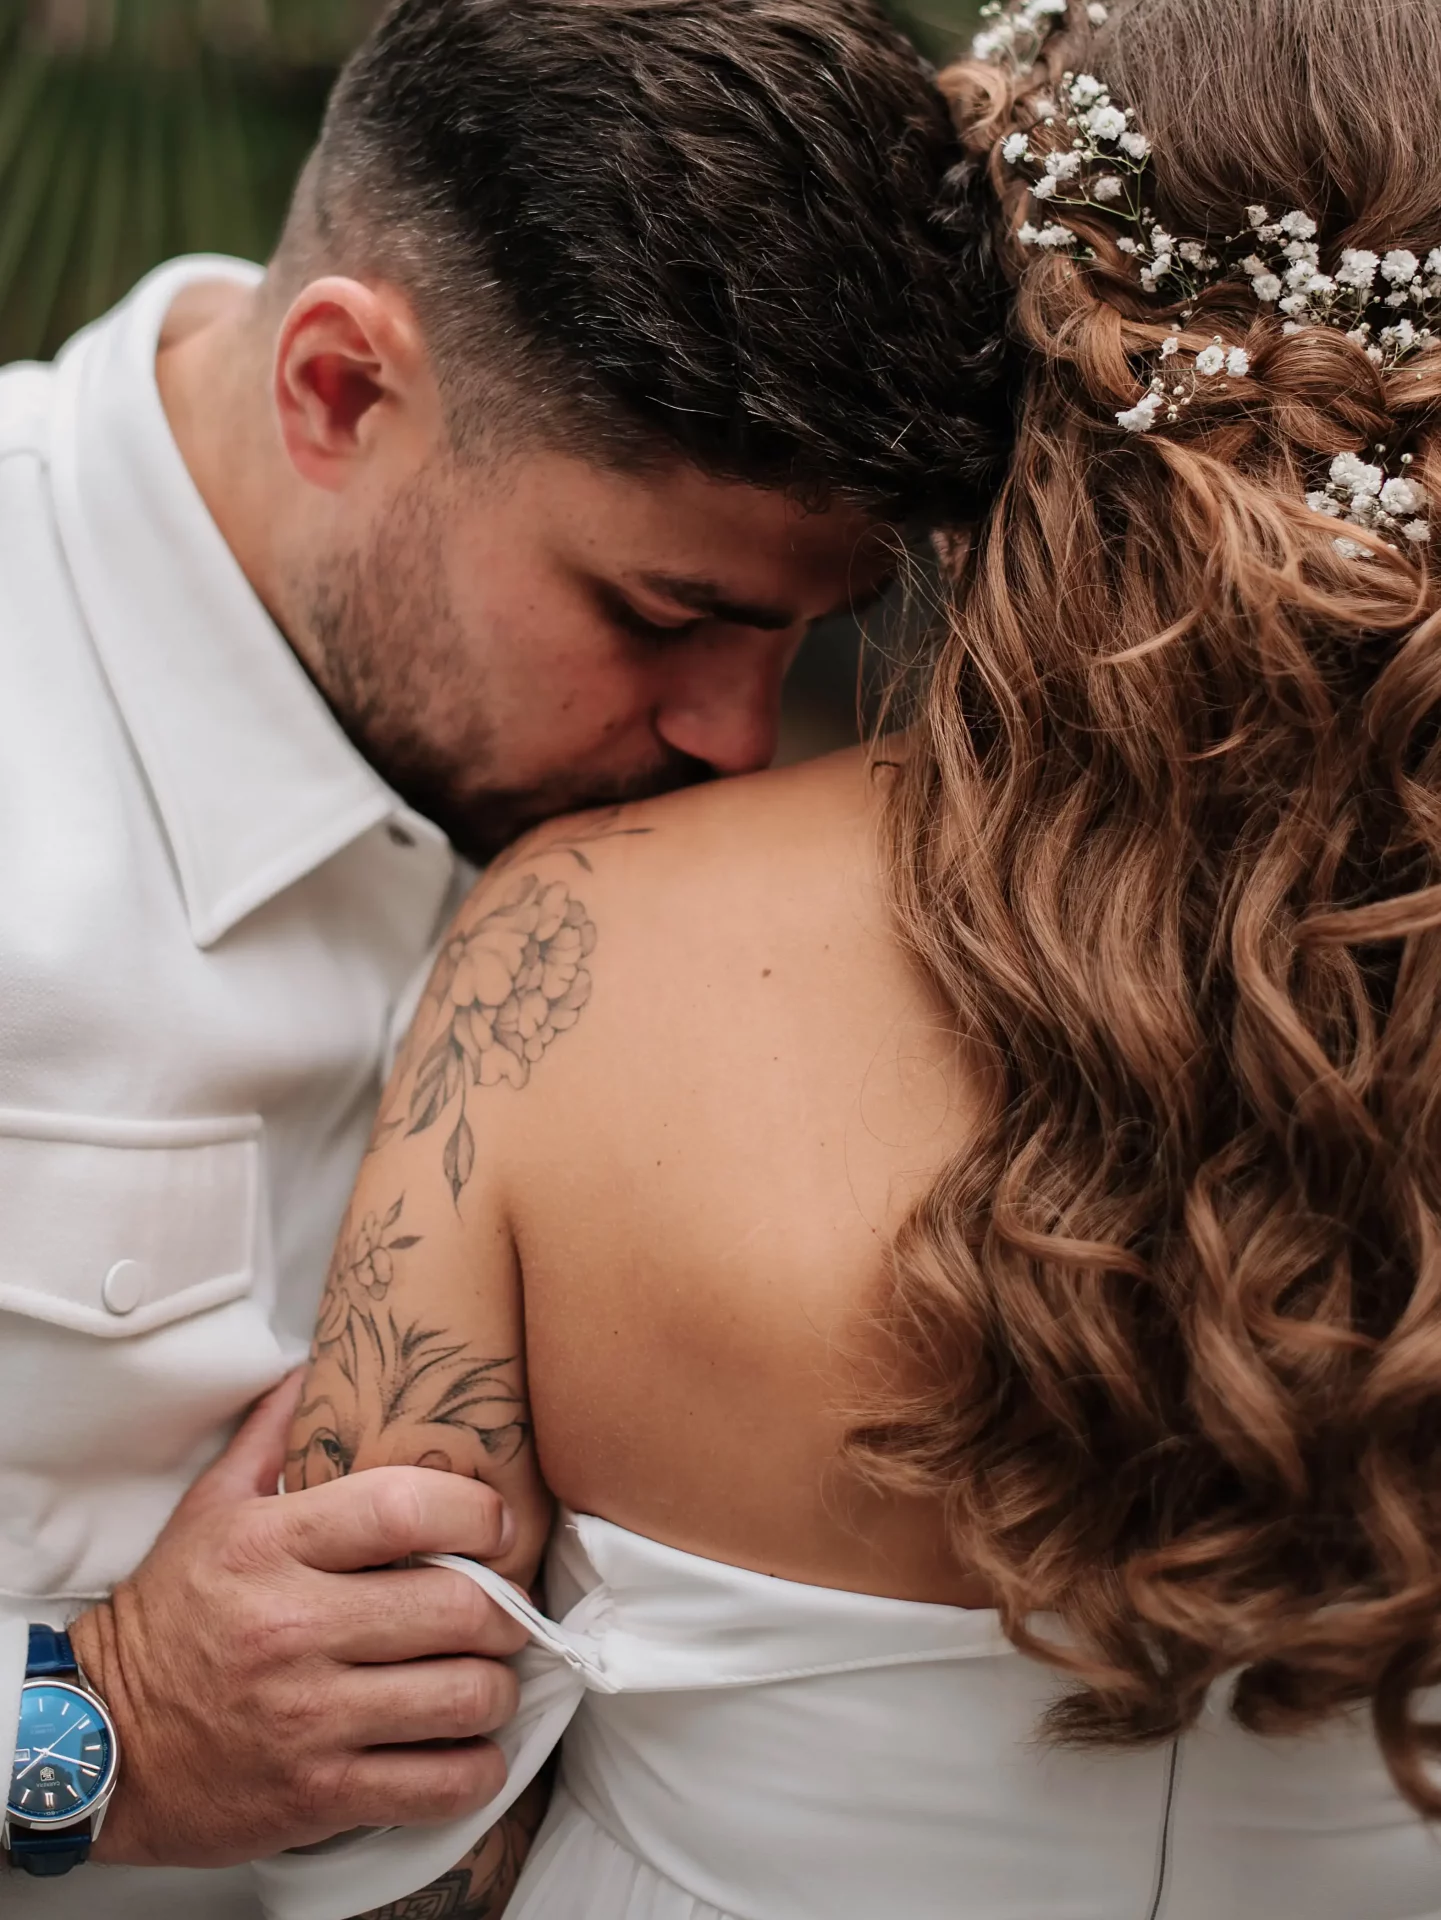 A groom at a wedding in Georgia kisses the bride's shoulder